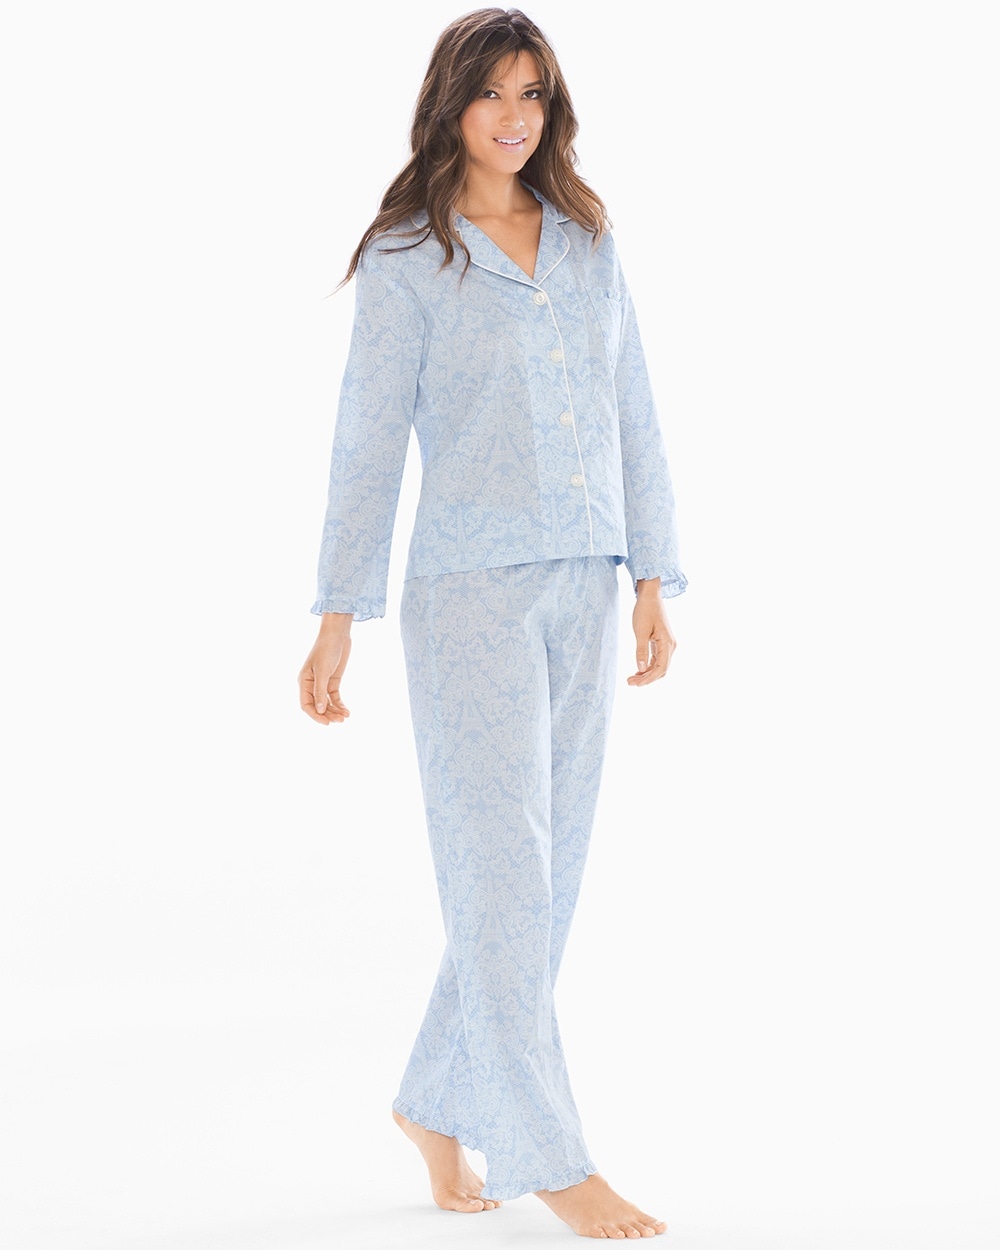 Bedhead Knit Cotton Pajama Set